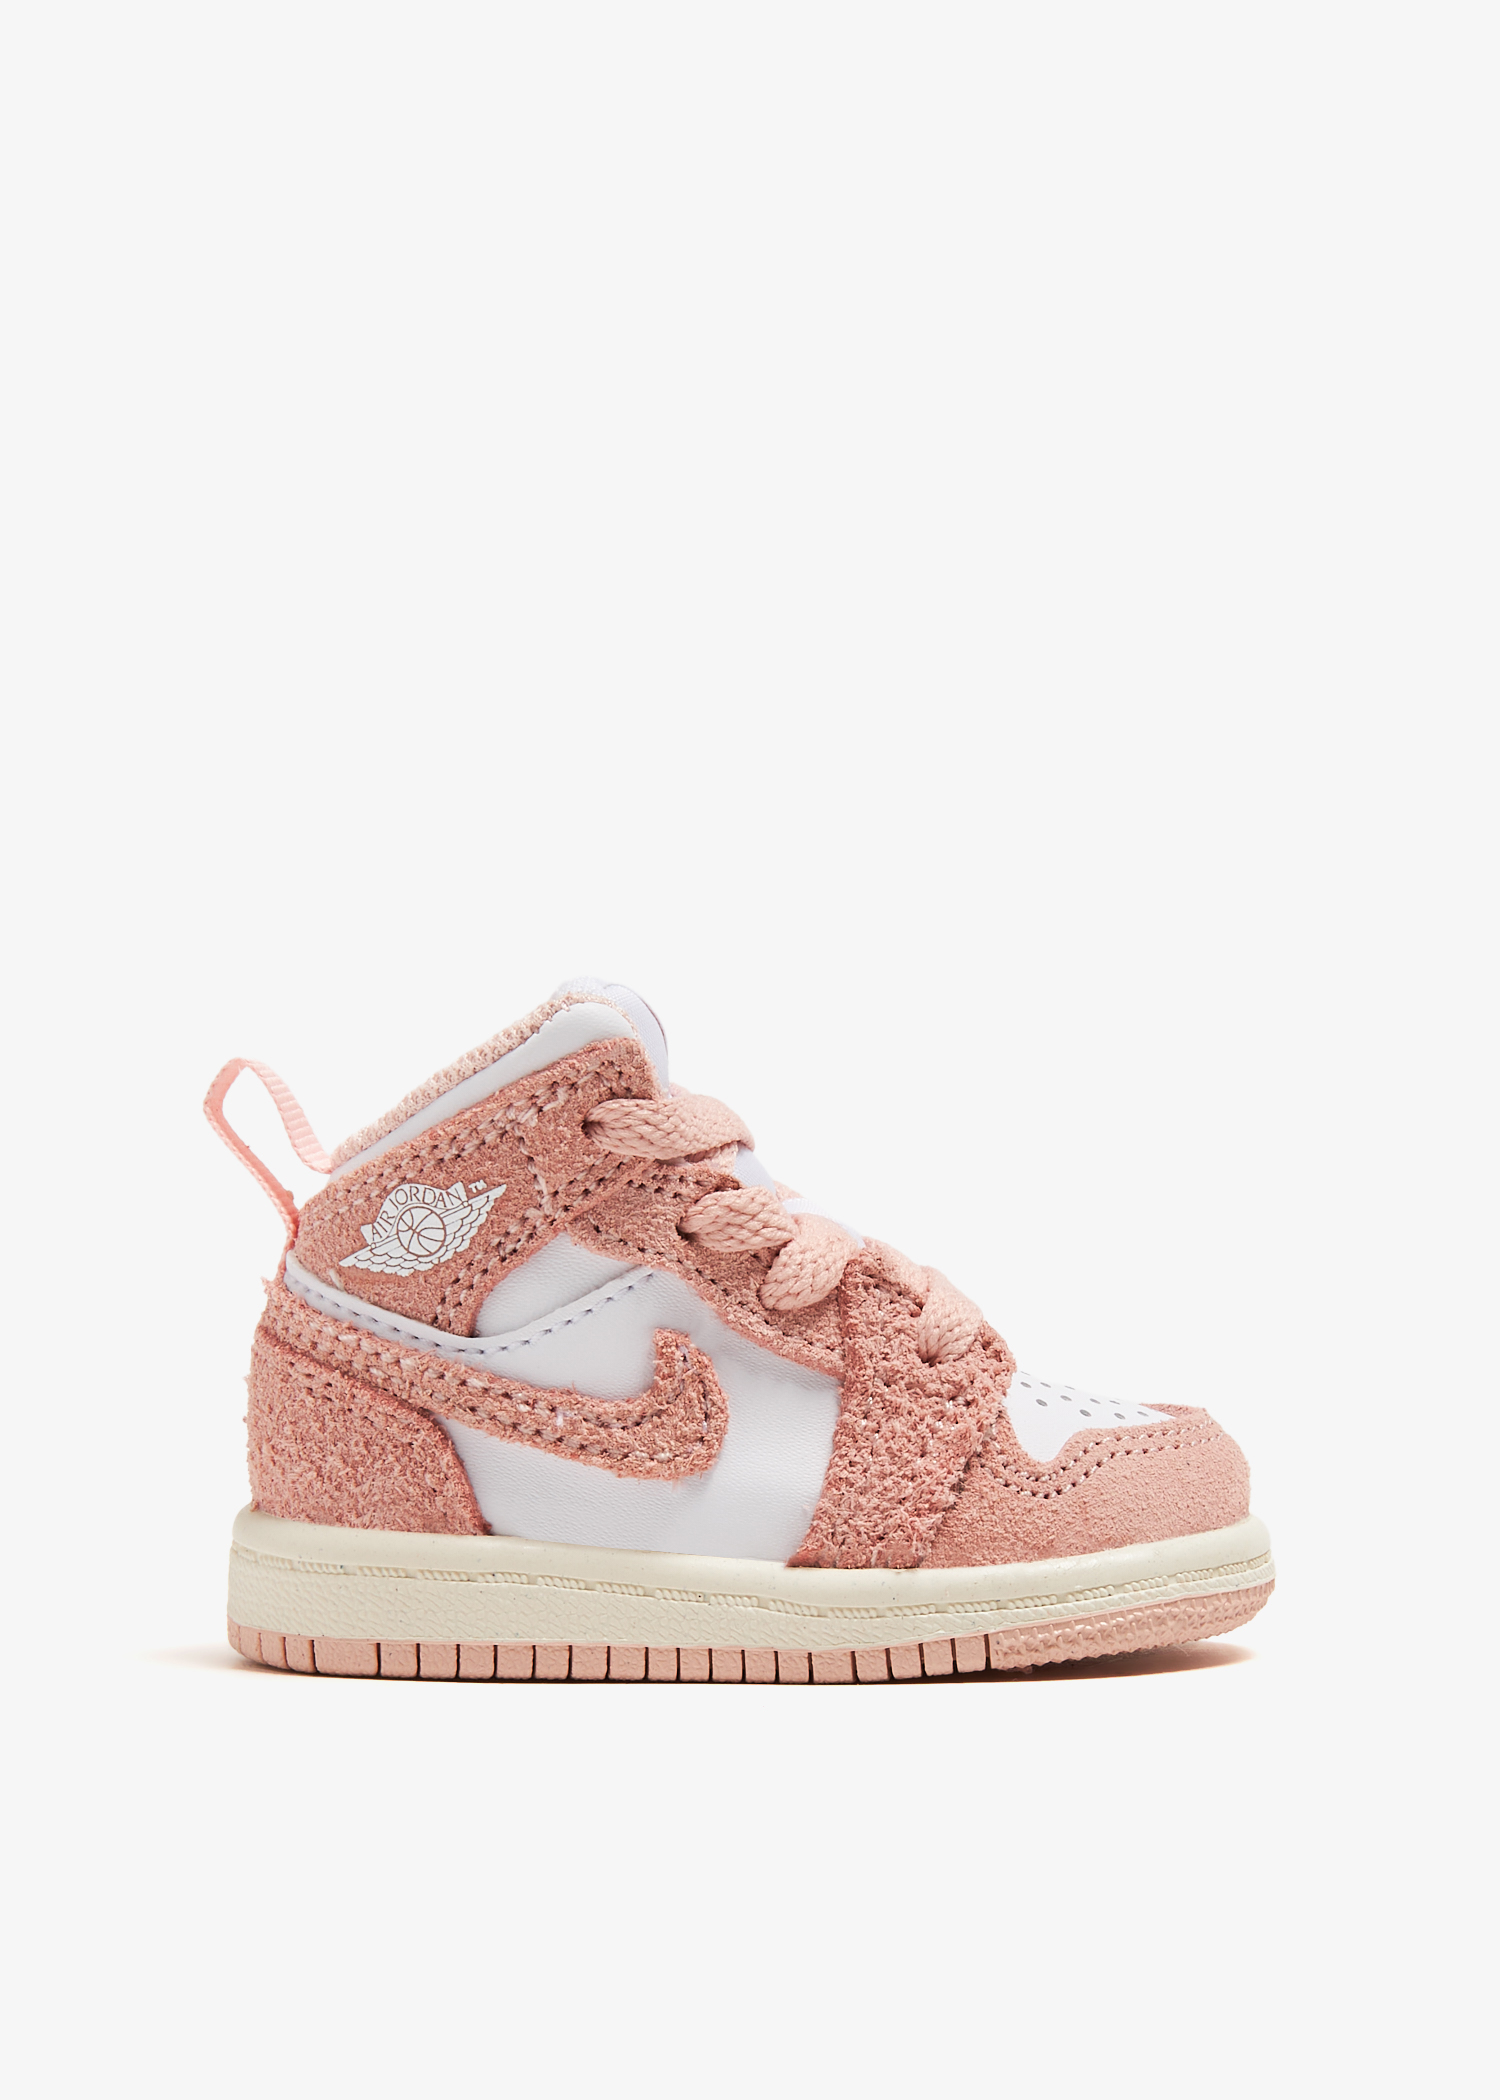 

Air Jordan 1 Mid sneakers, Pink